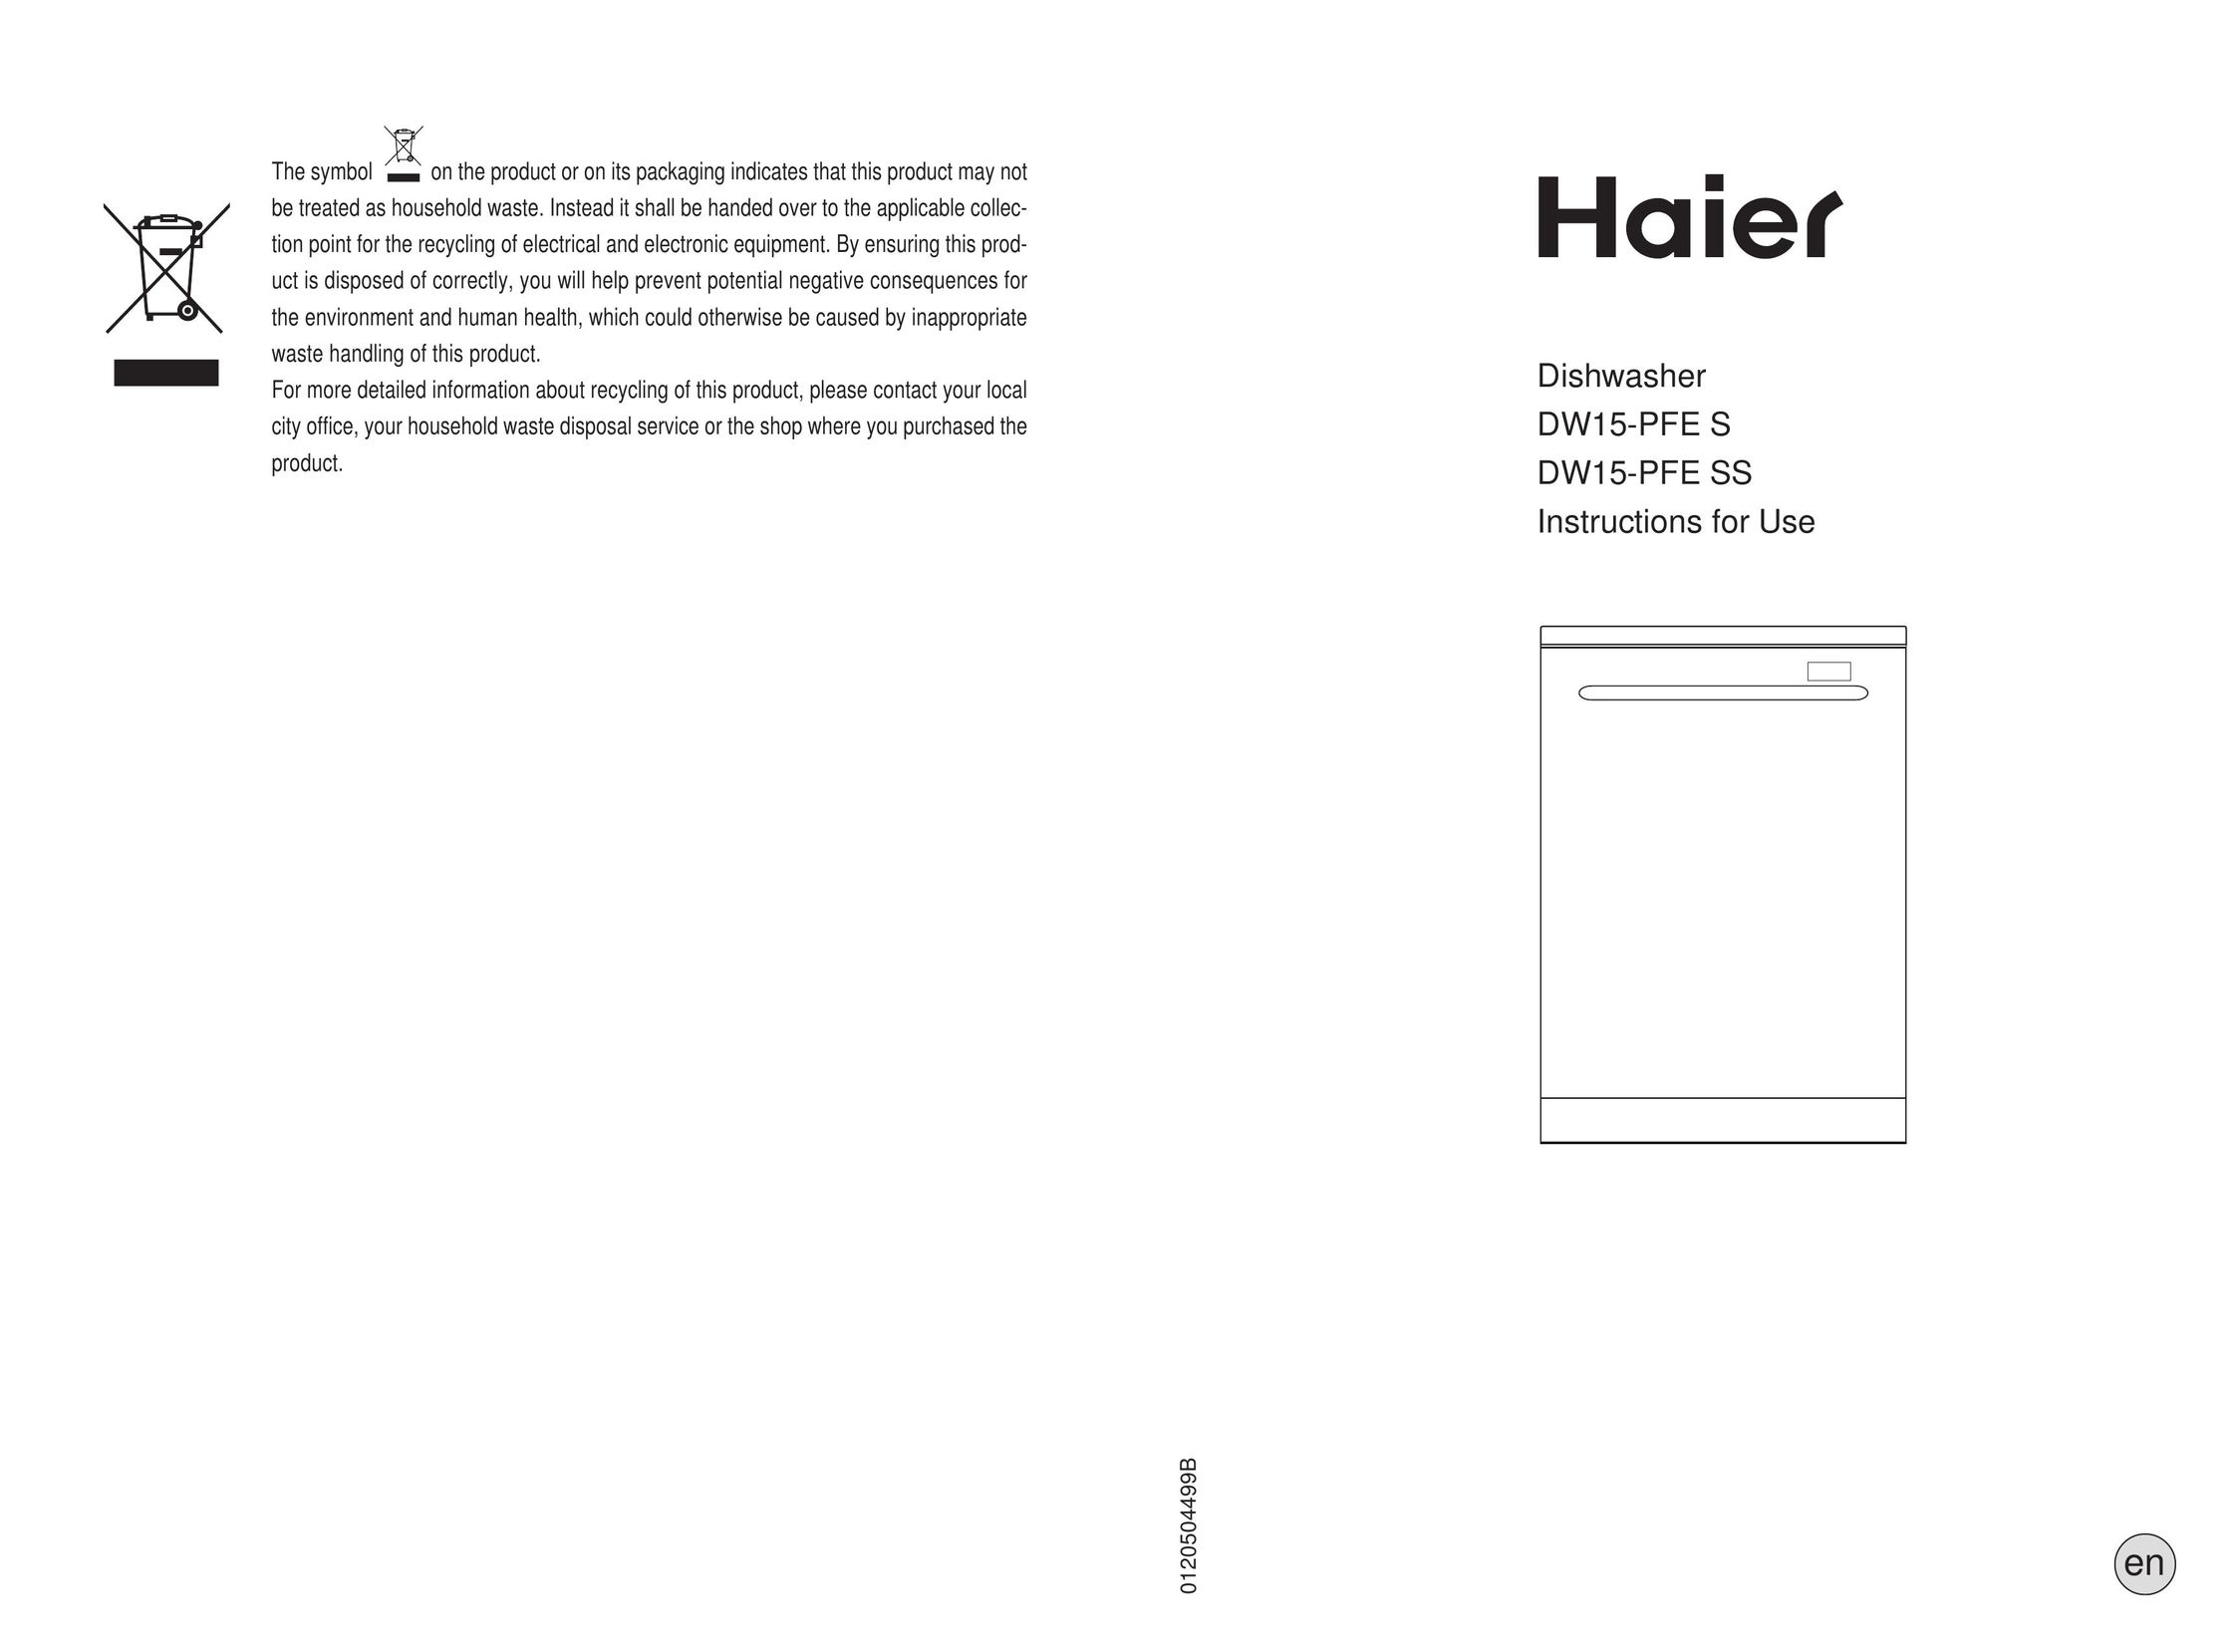 Haier DW15-PFE SS Dishwasher User Manual